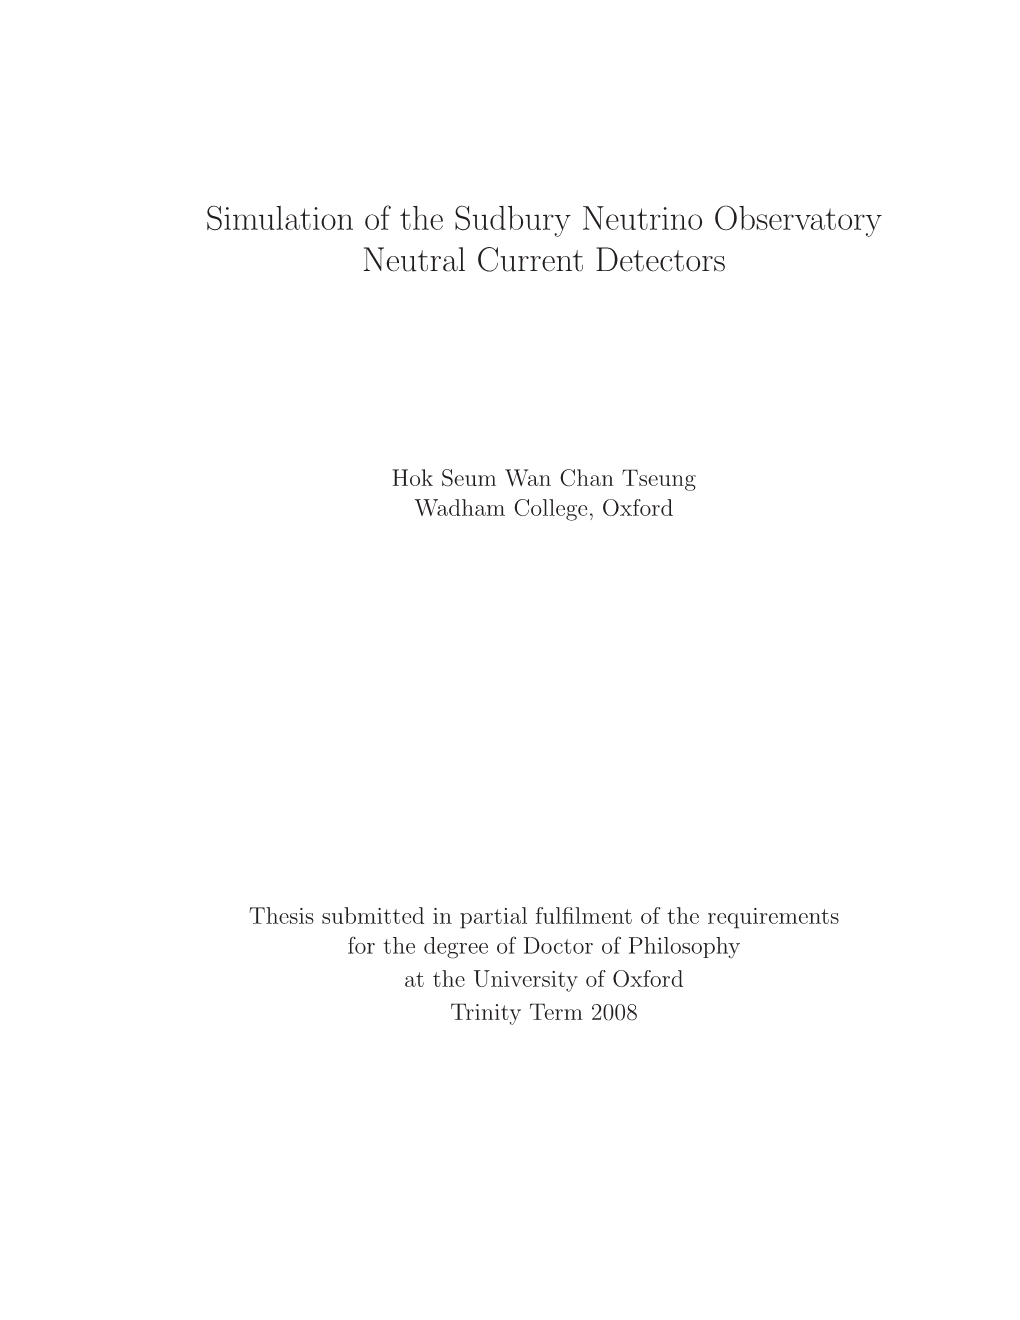 Simulation of the Sudbury Neutrino Observatory Neutral Current Detectors